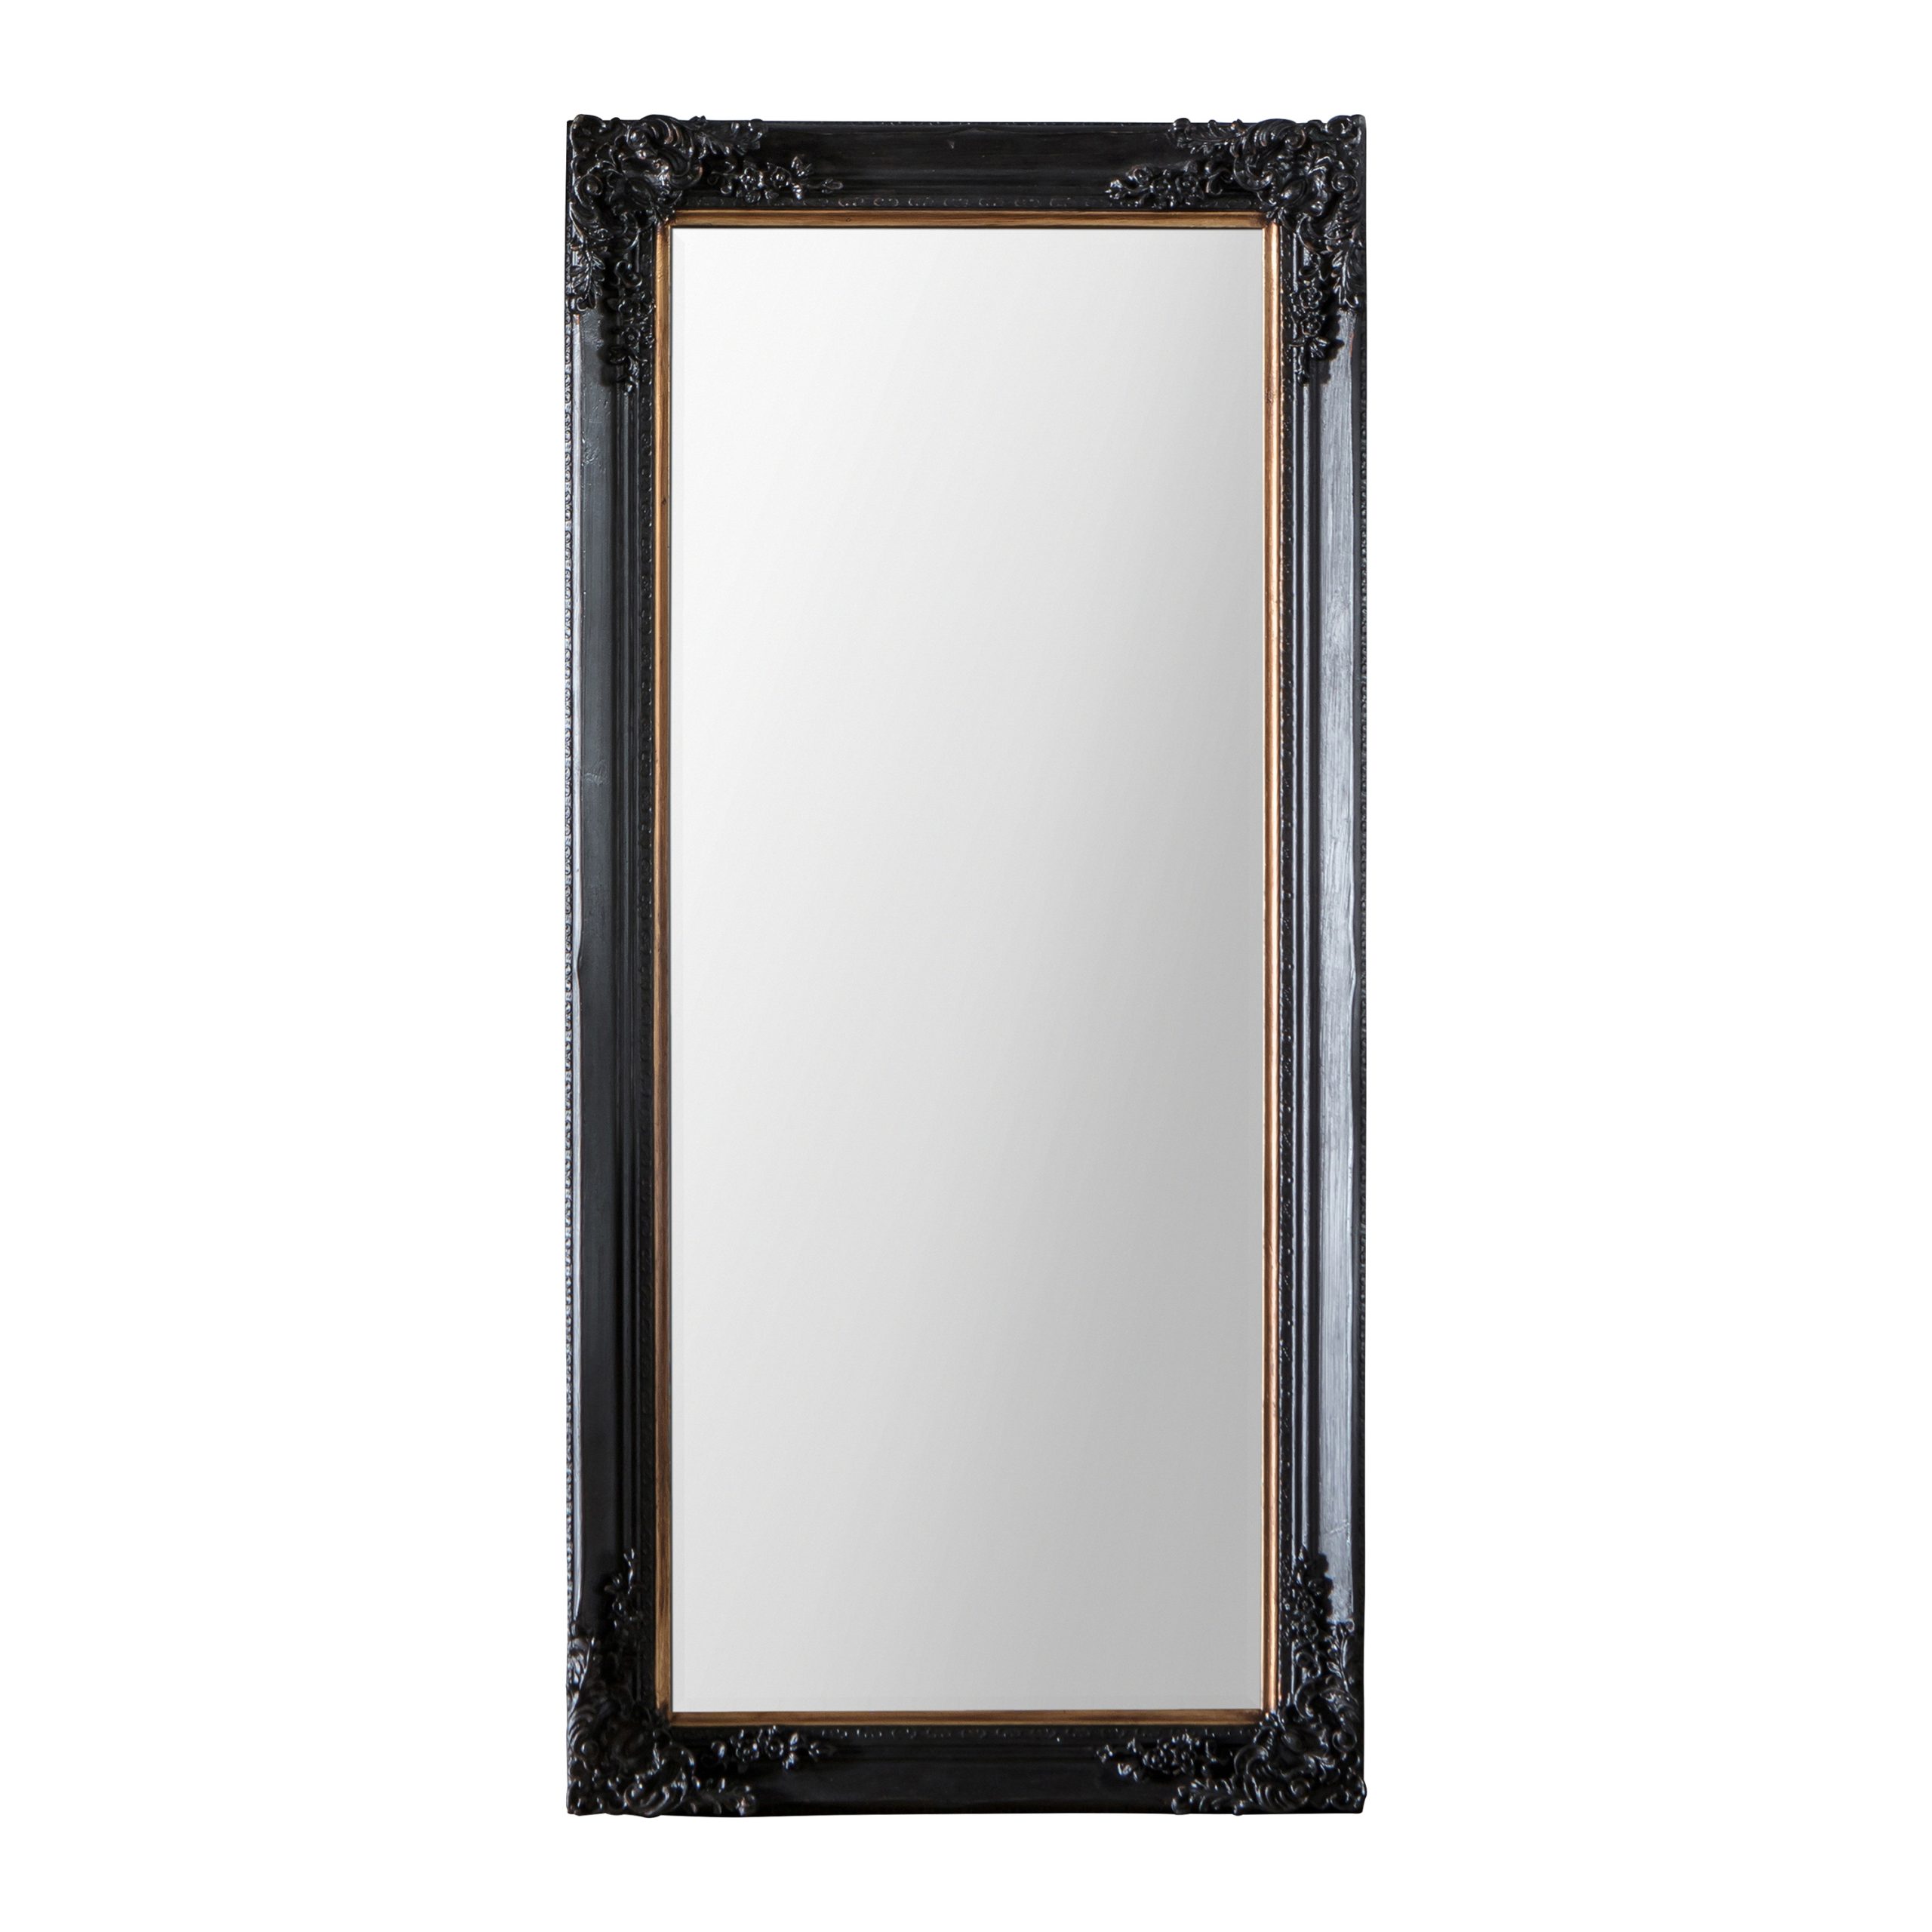 Gallery Direct Harrelson Leaner Mirror Antique Black